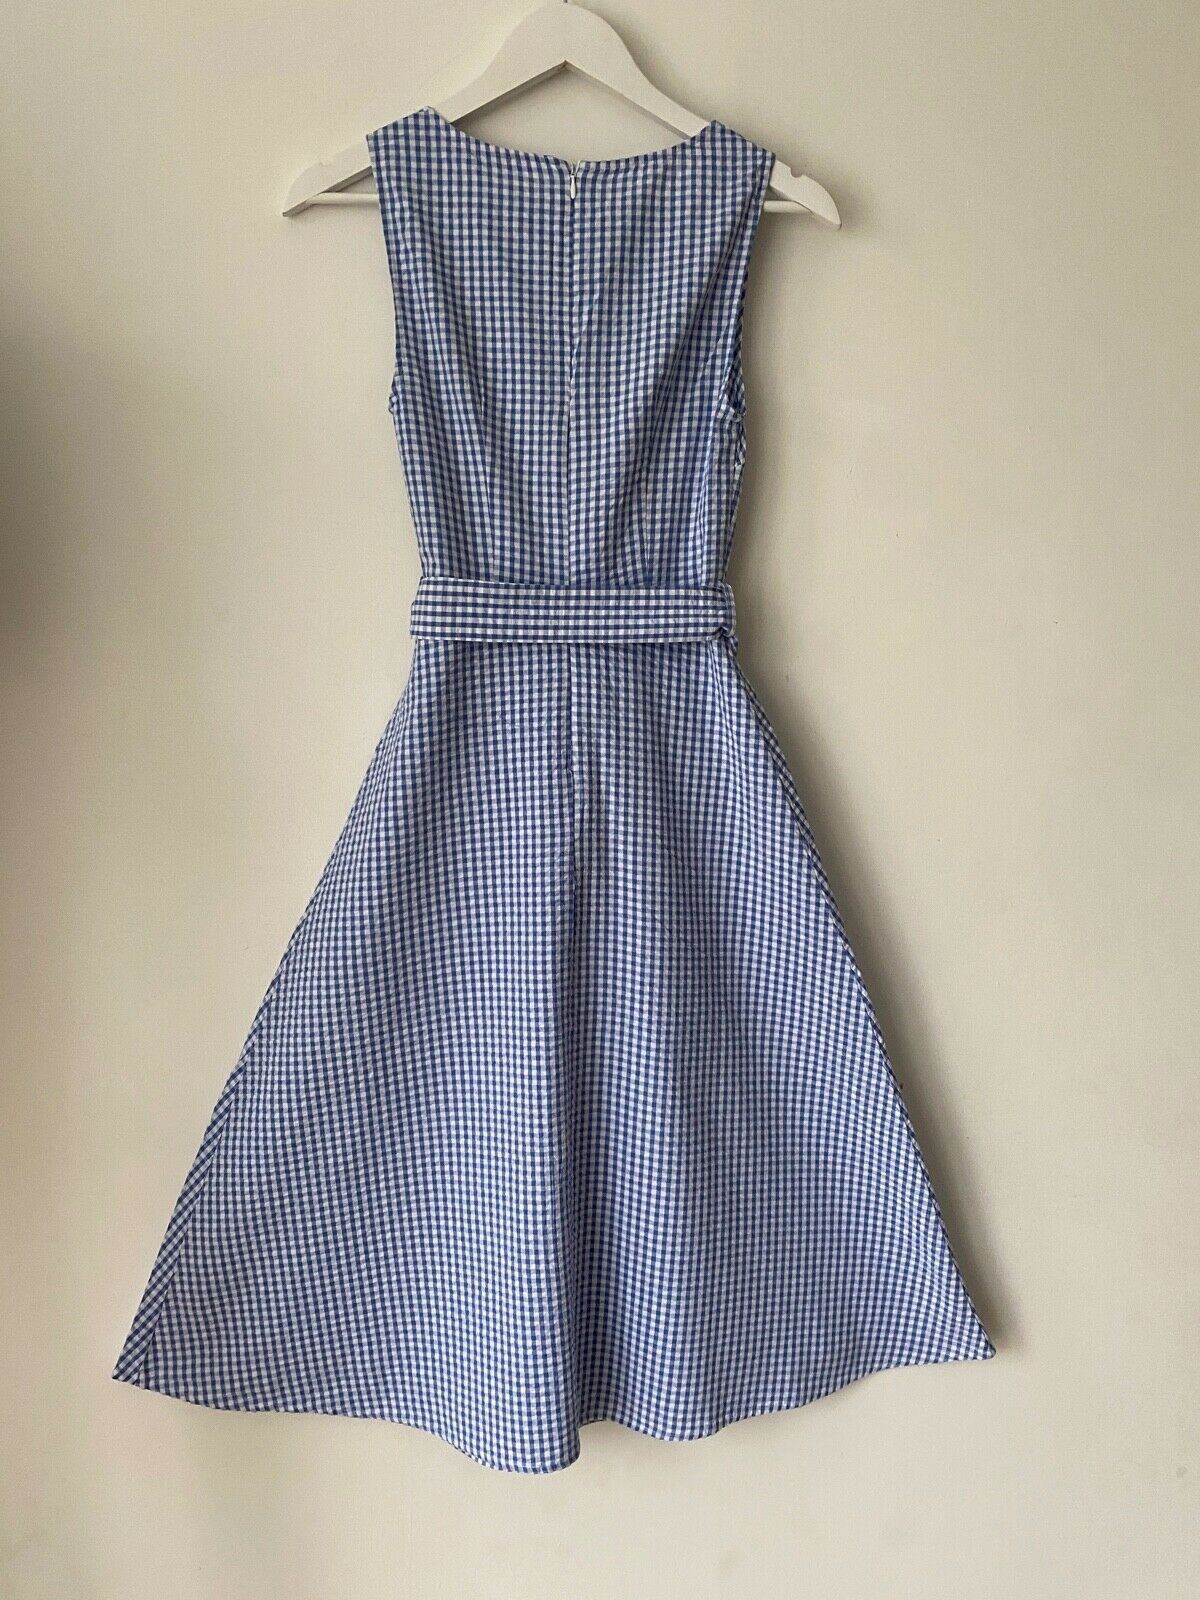 Joules Blue Gingham Sleeveless Dress Fiona Blugingham Size 4 UK